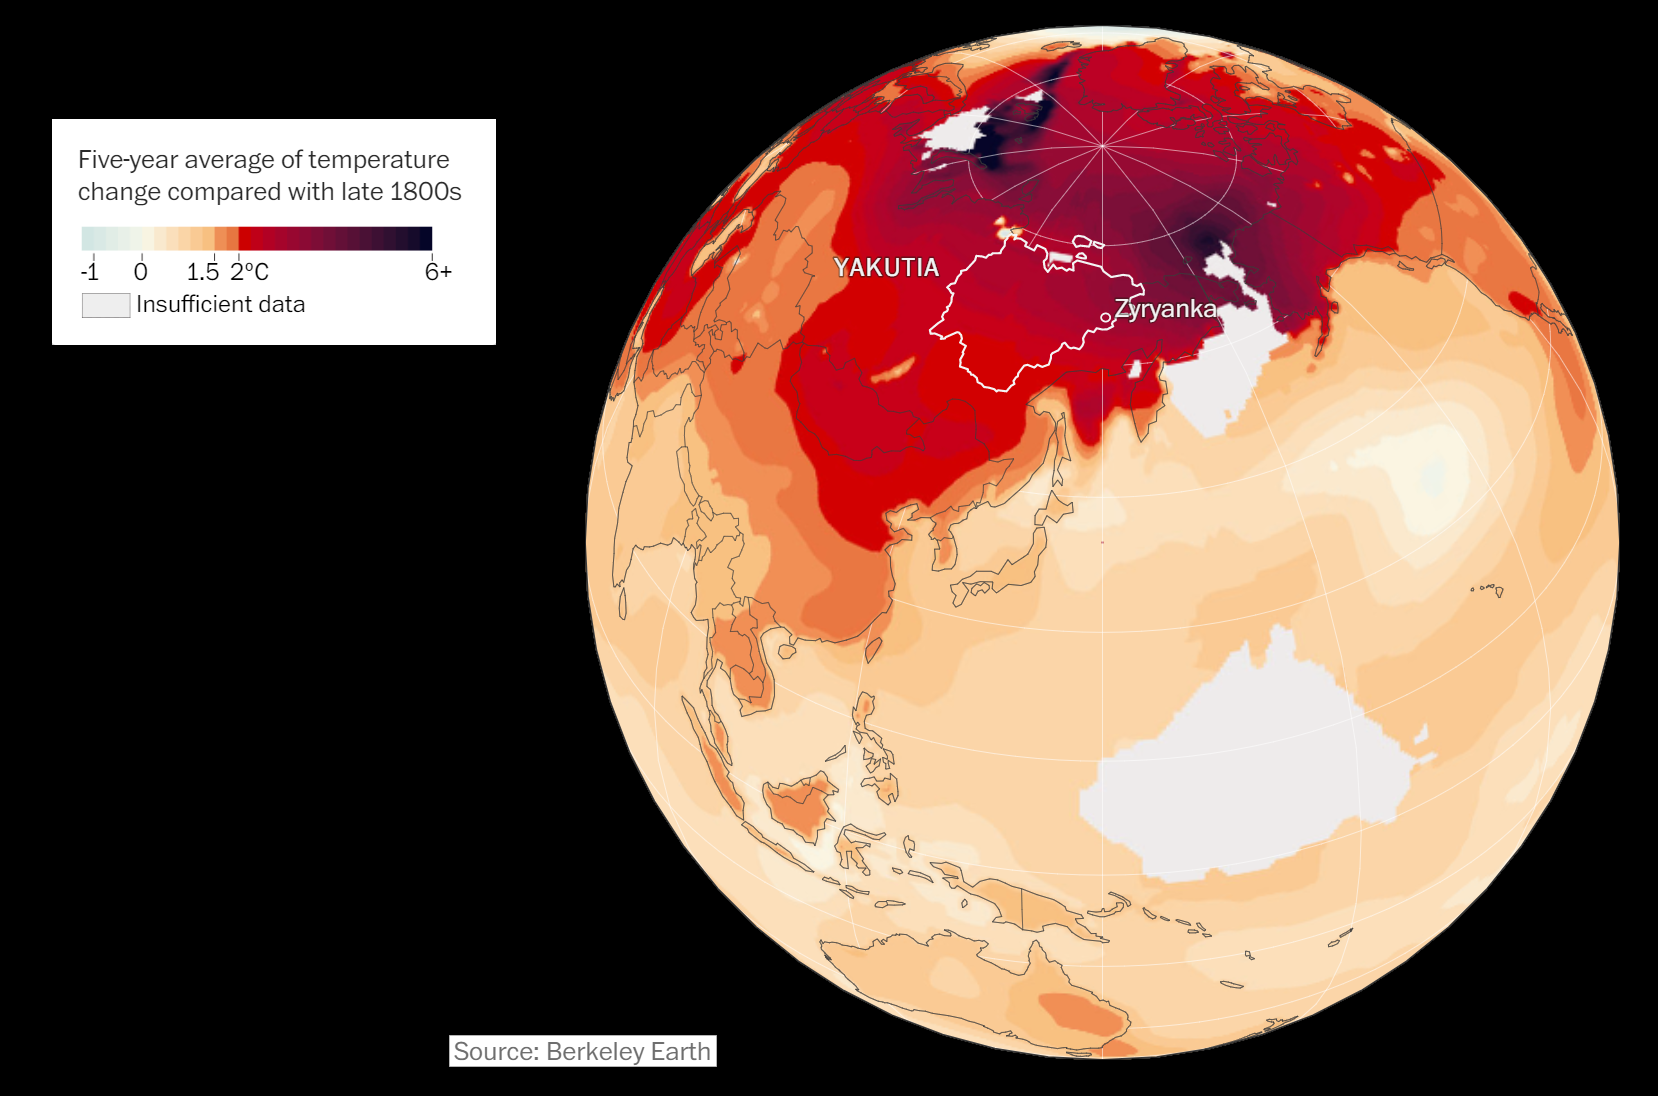 Five-year average of temperature change around Zyryanka, Siberia compared with the late 1800s. Data: Berkeley Earth. Graphic: The Washington Post